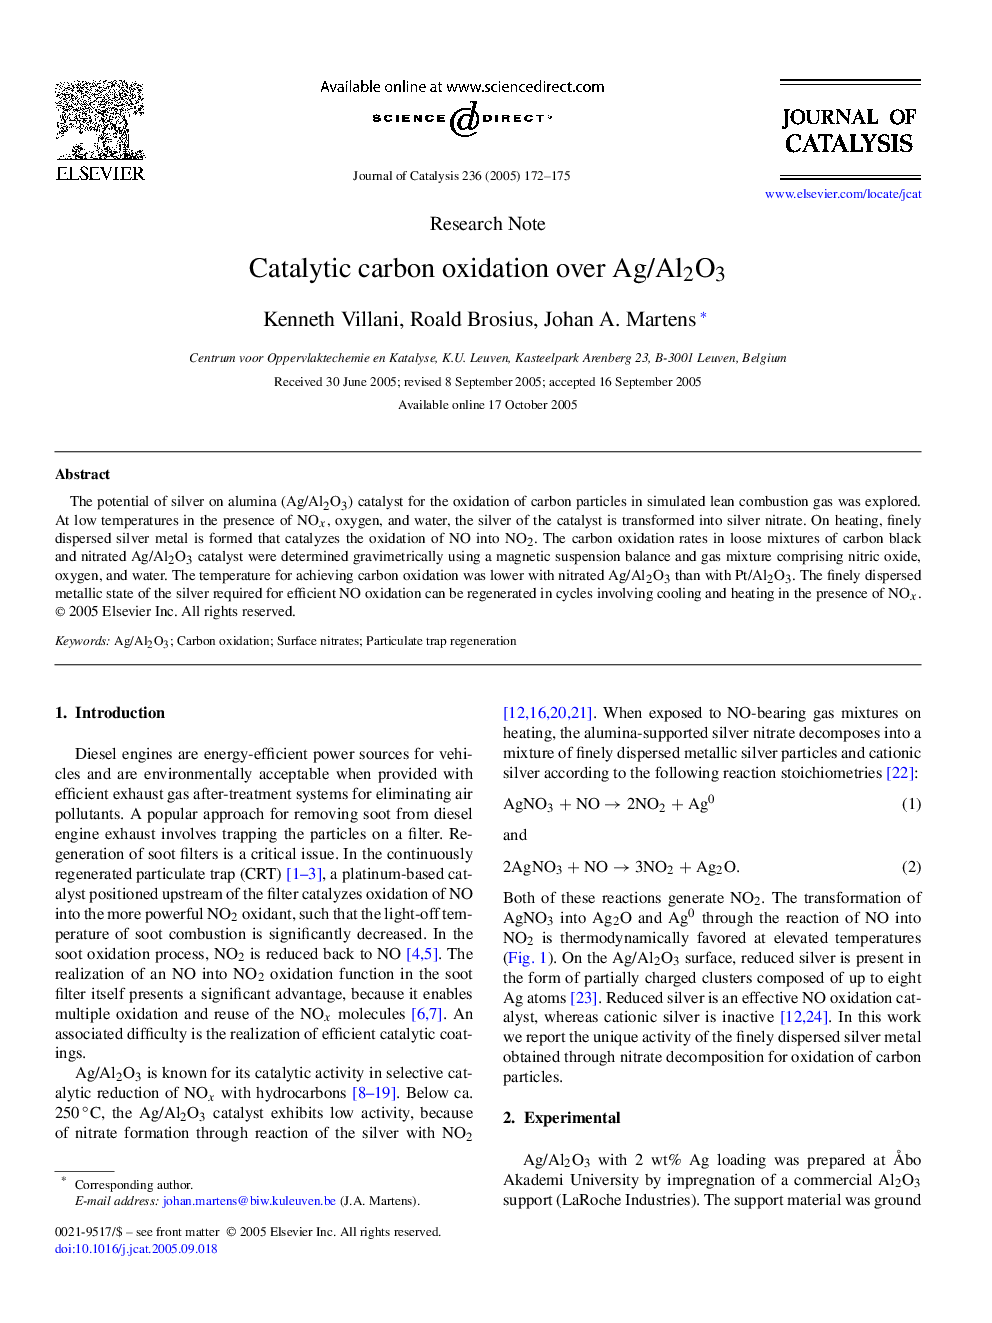 Catalytic carbon oxidation over Ag/Al2O3